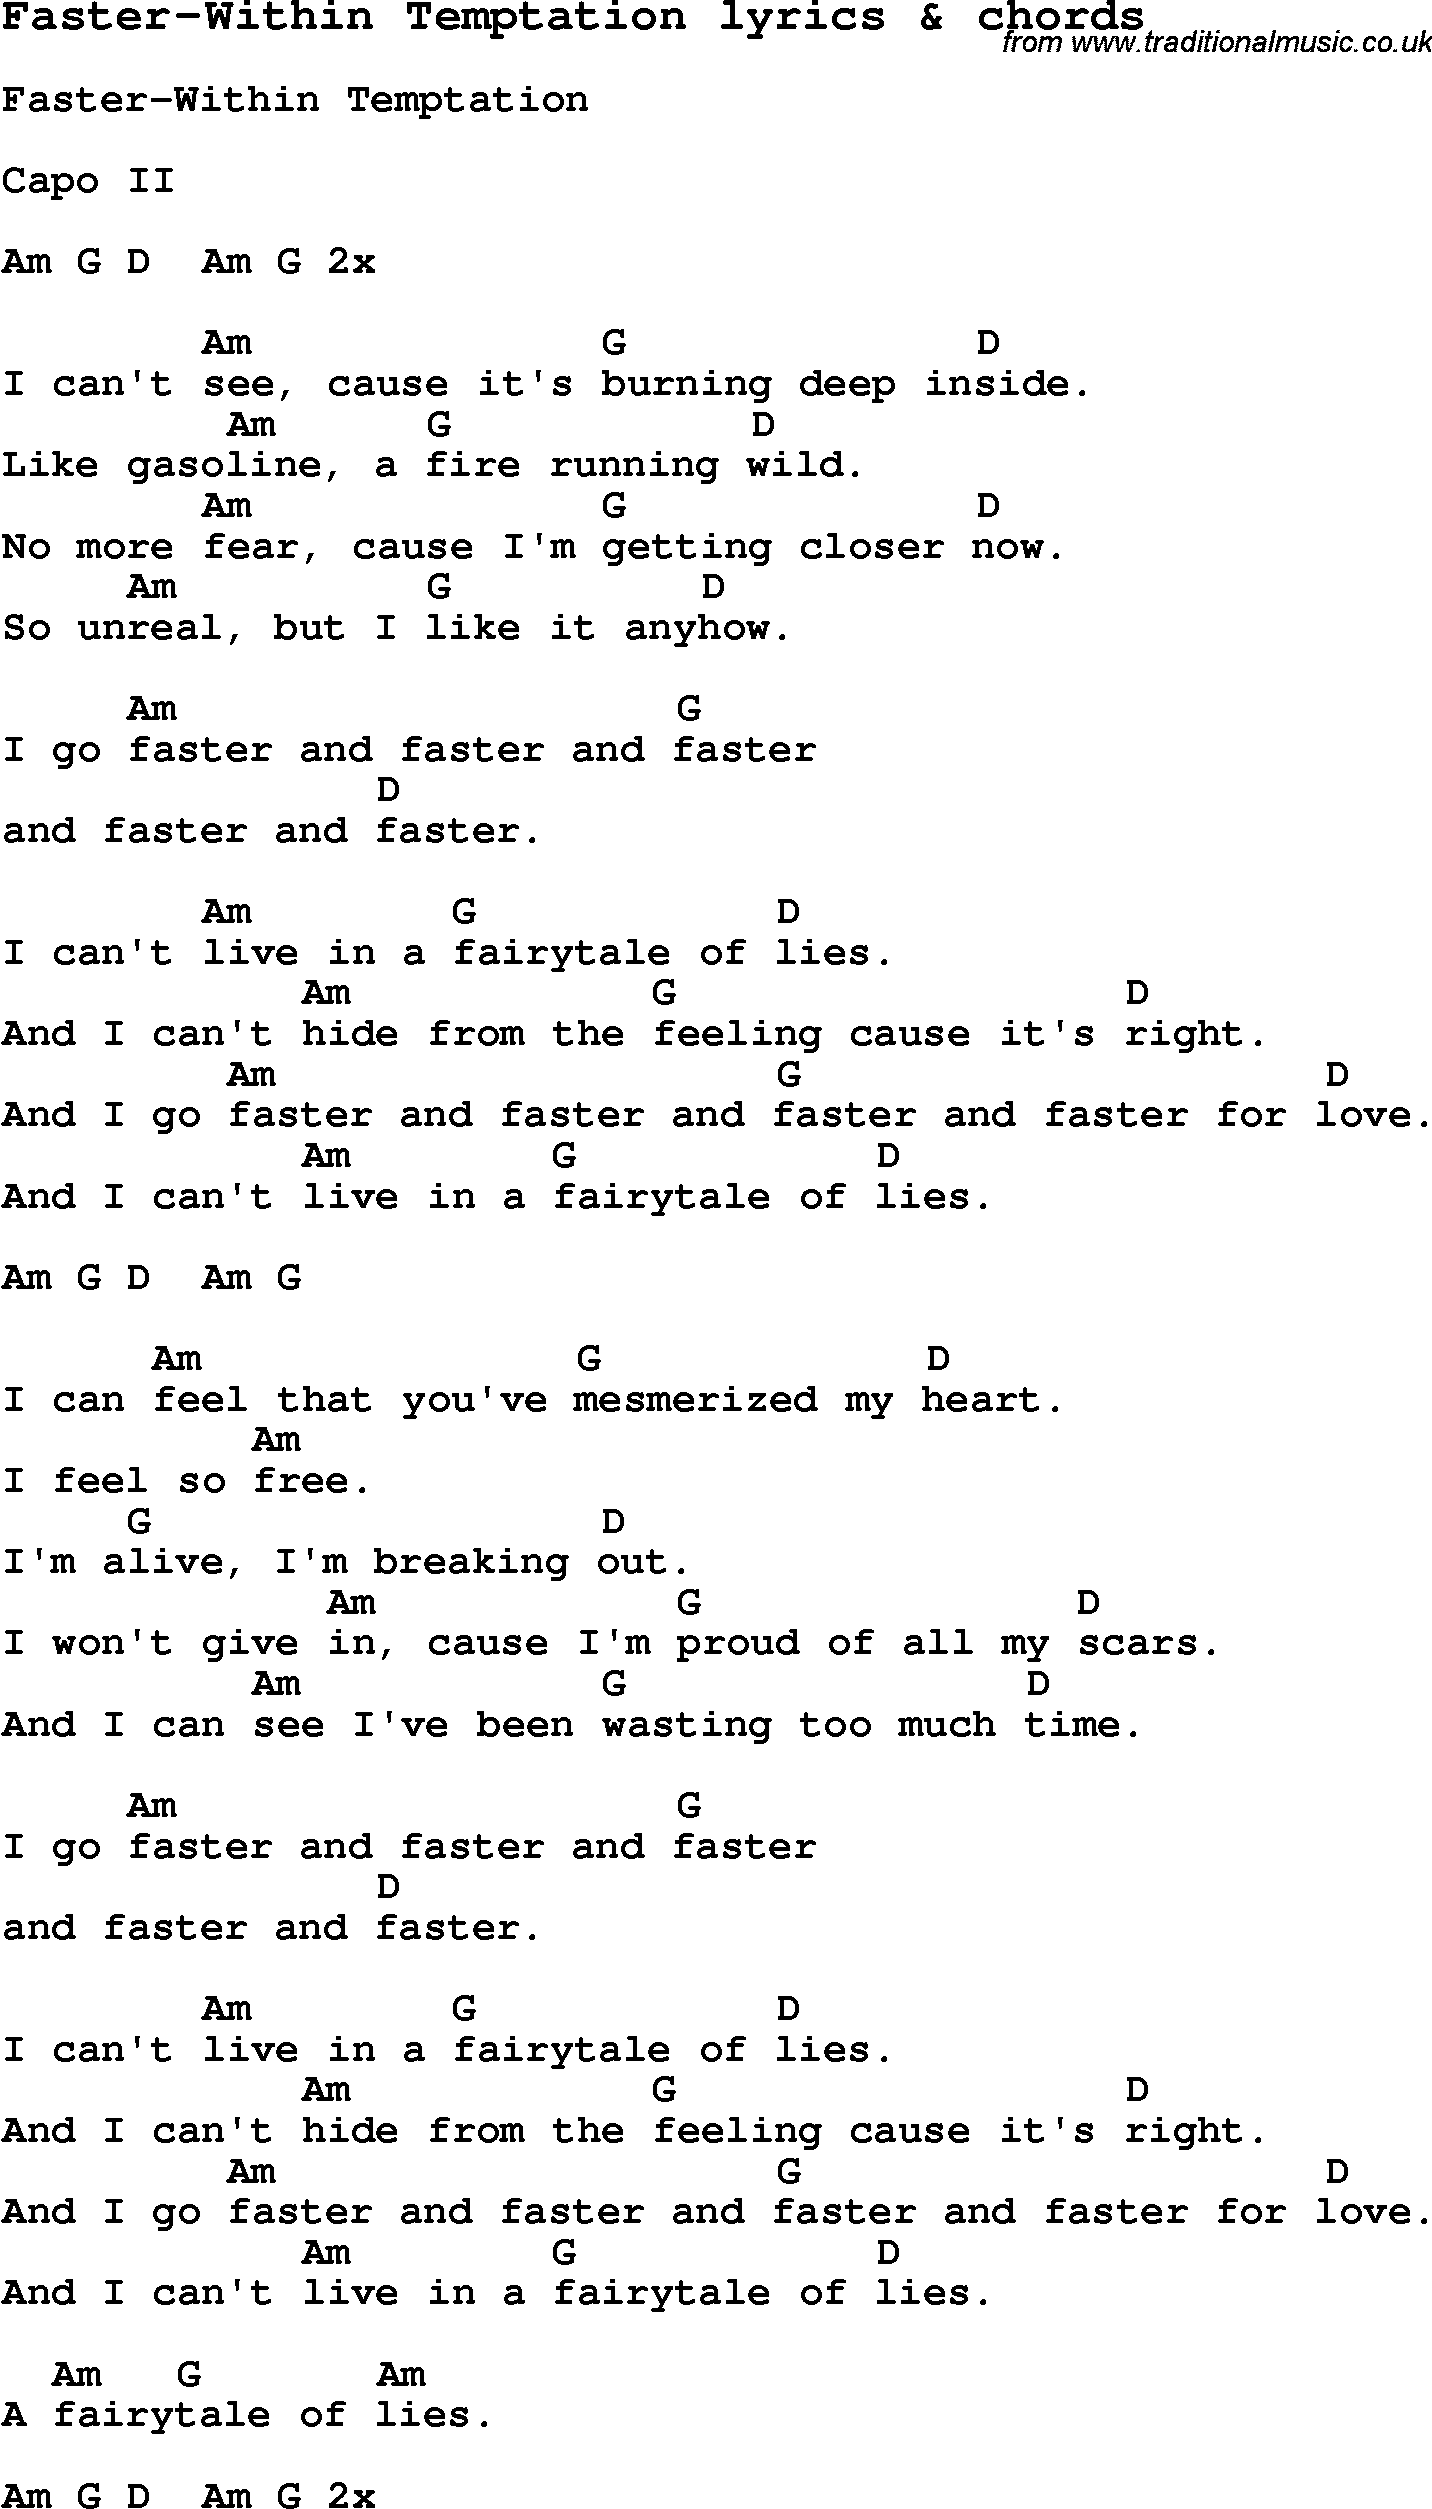 Love Song Lyrics for: Faster-Within Temptation with chords for Ukulele, Guitar Banjo etc.